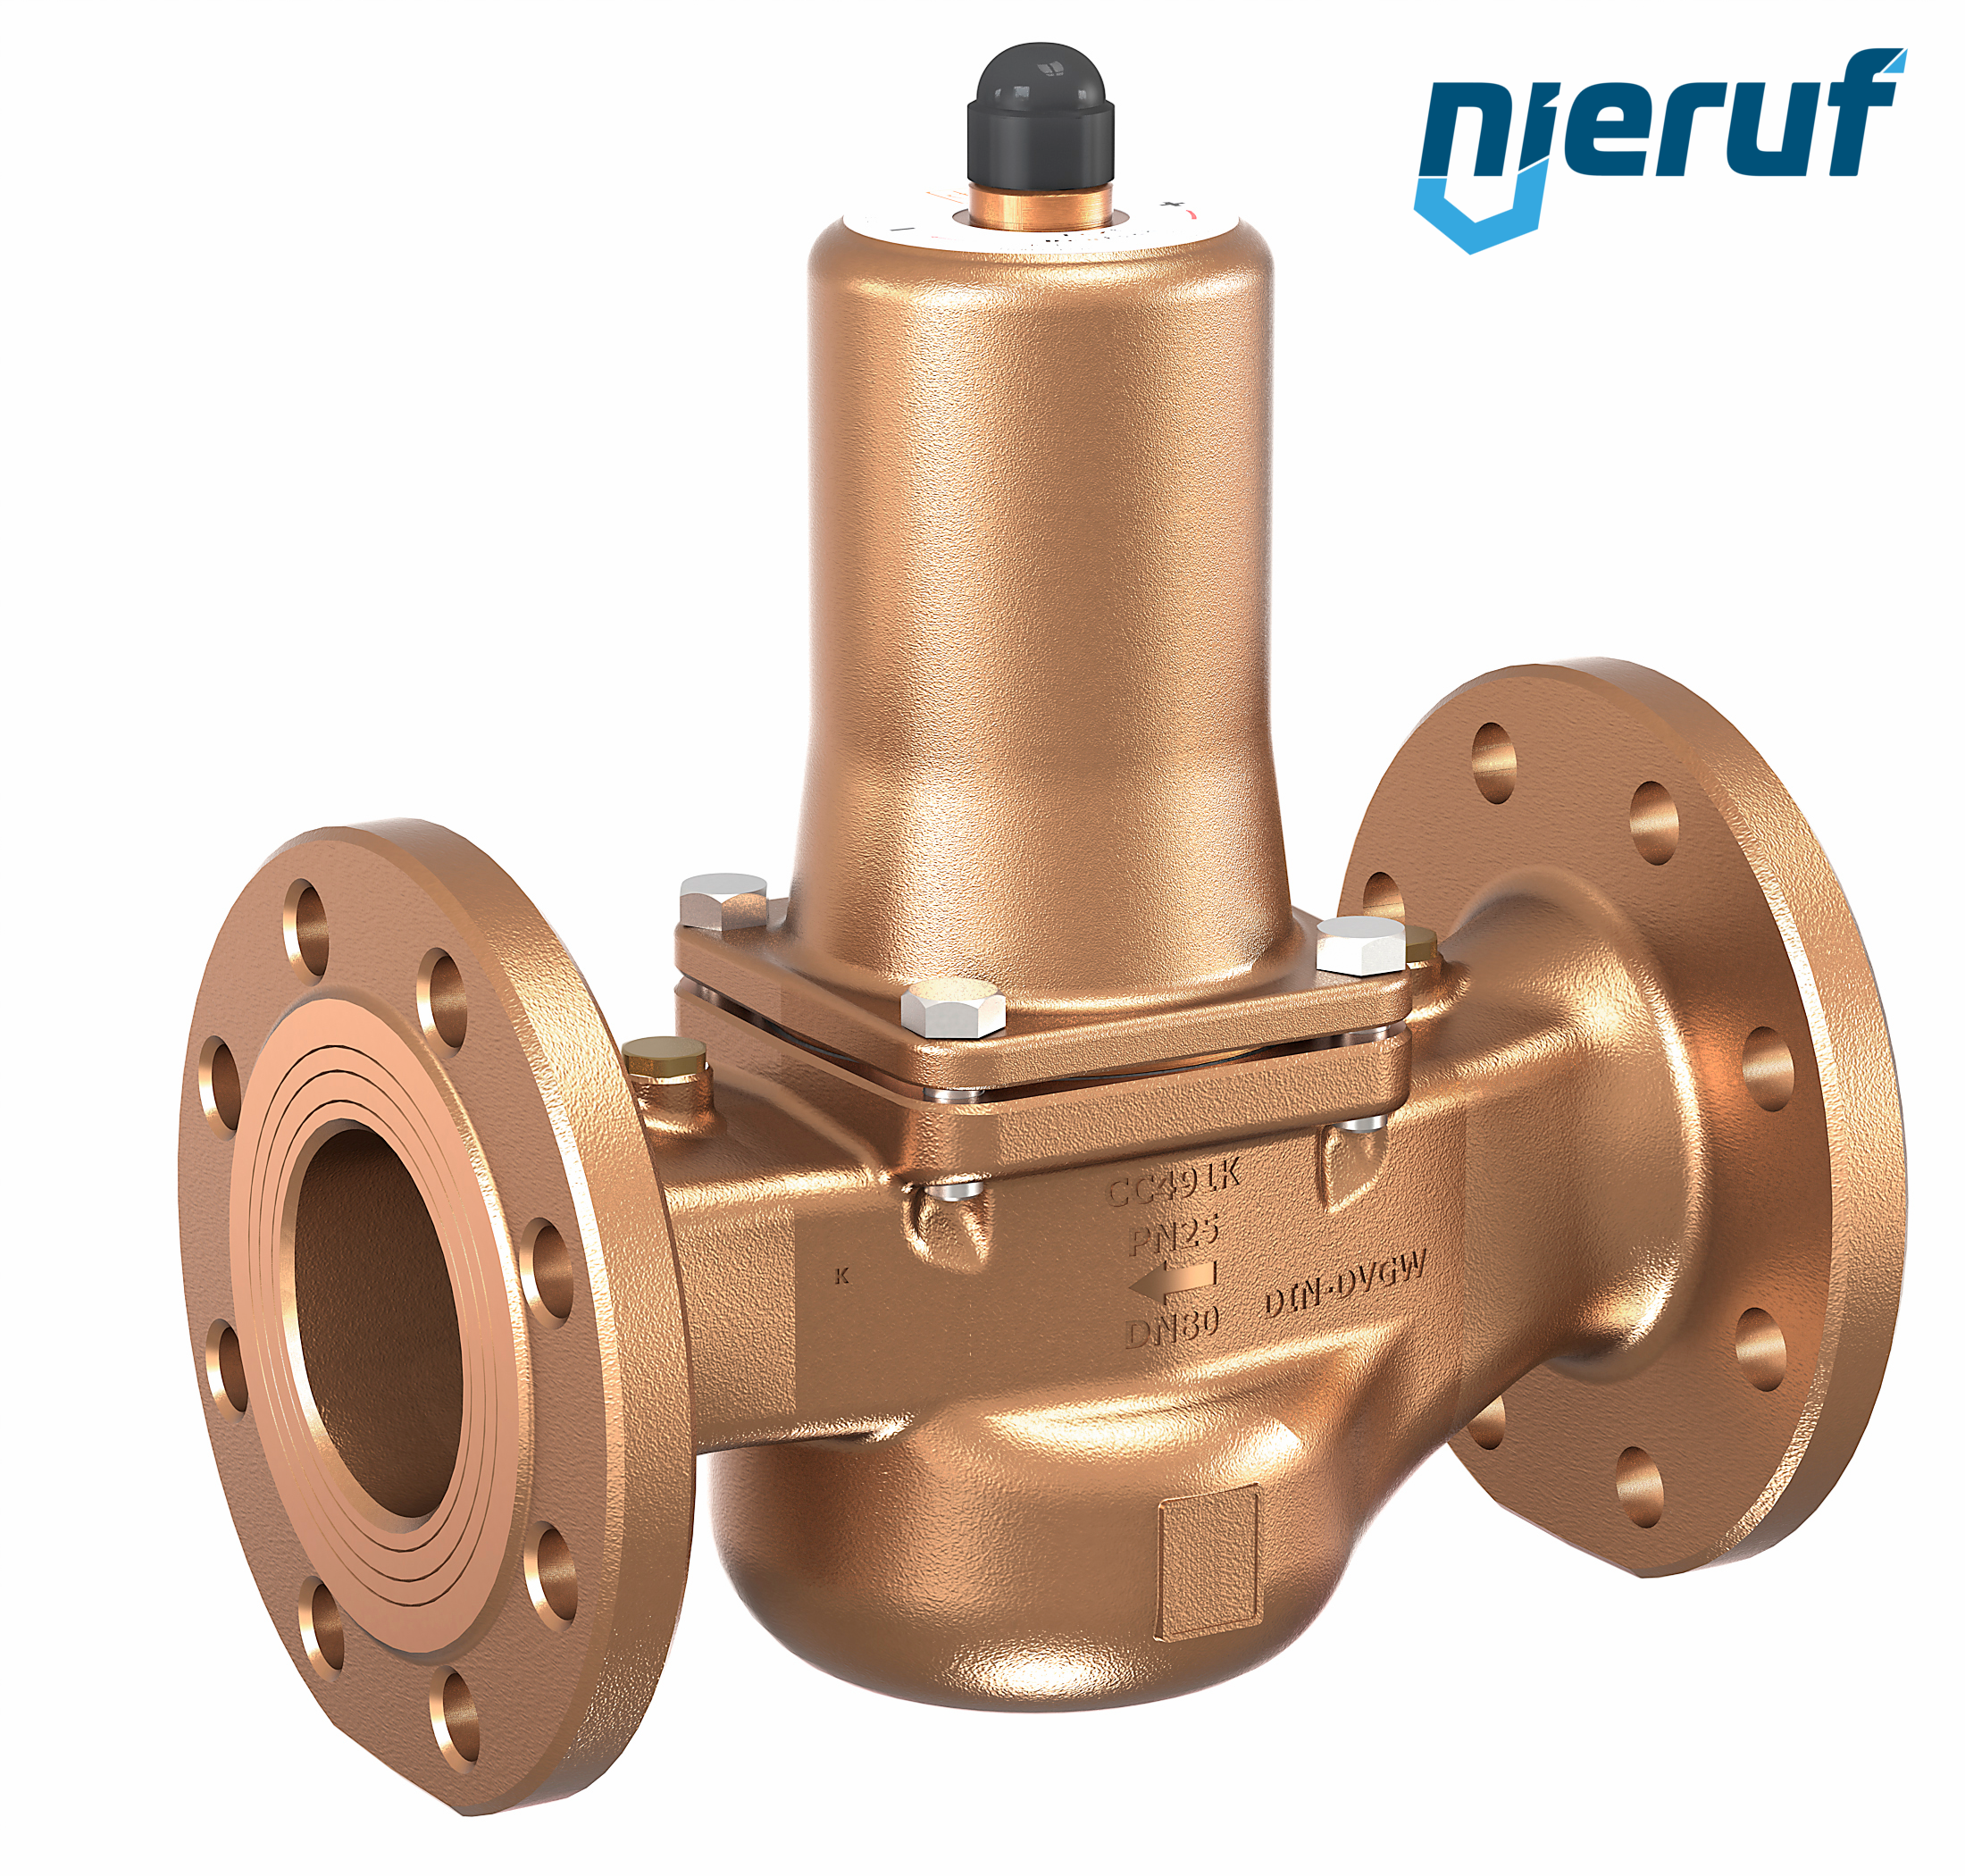 flange overflow valve DN 25 PN40 UV10 gunmetal/brass 0,5 - 2,0 bar